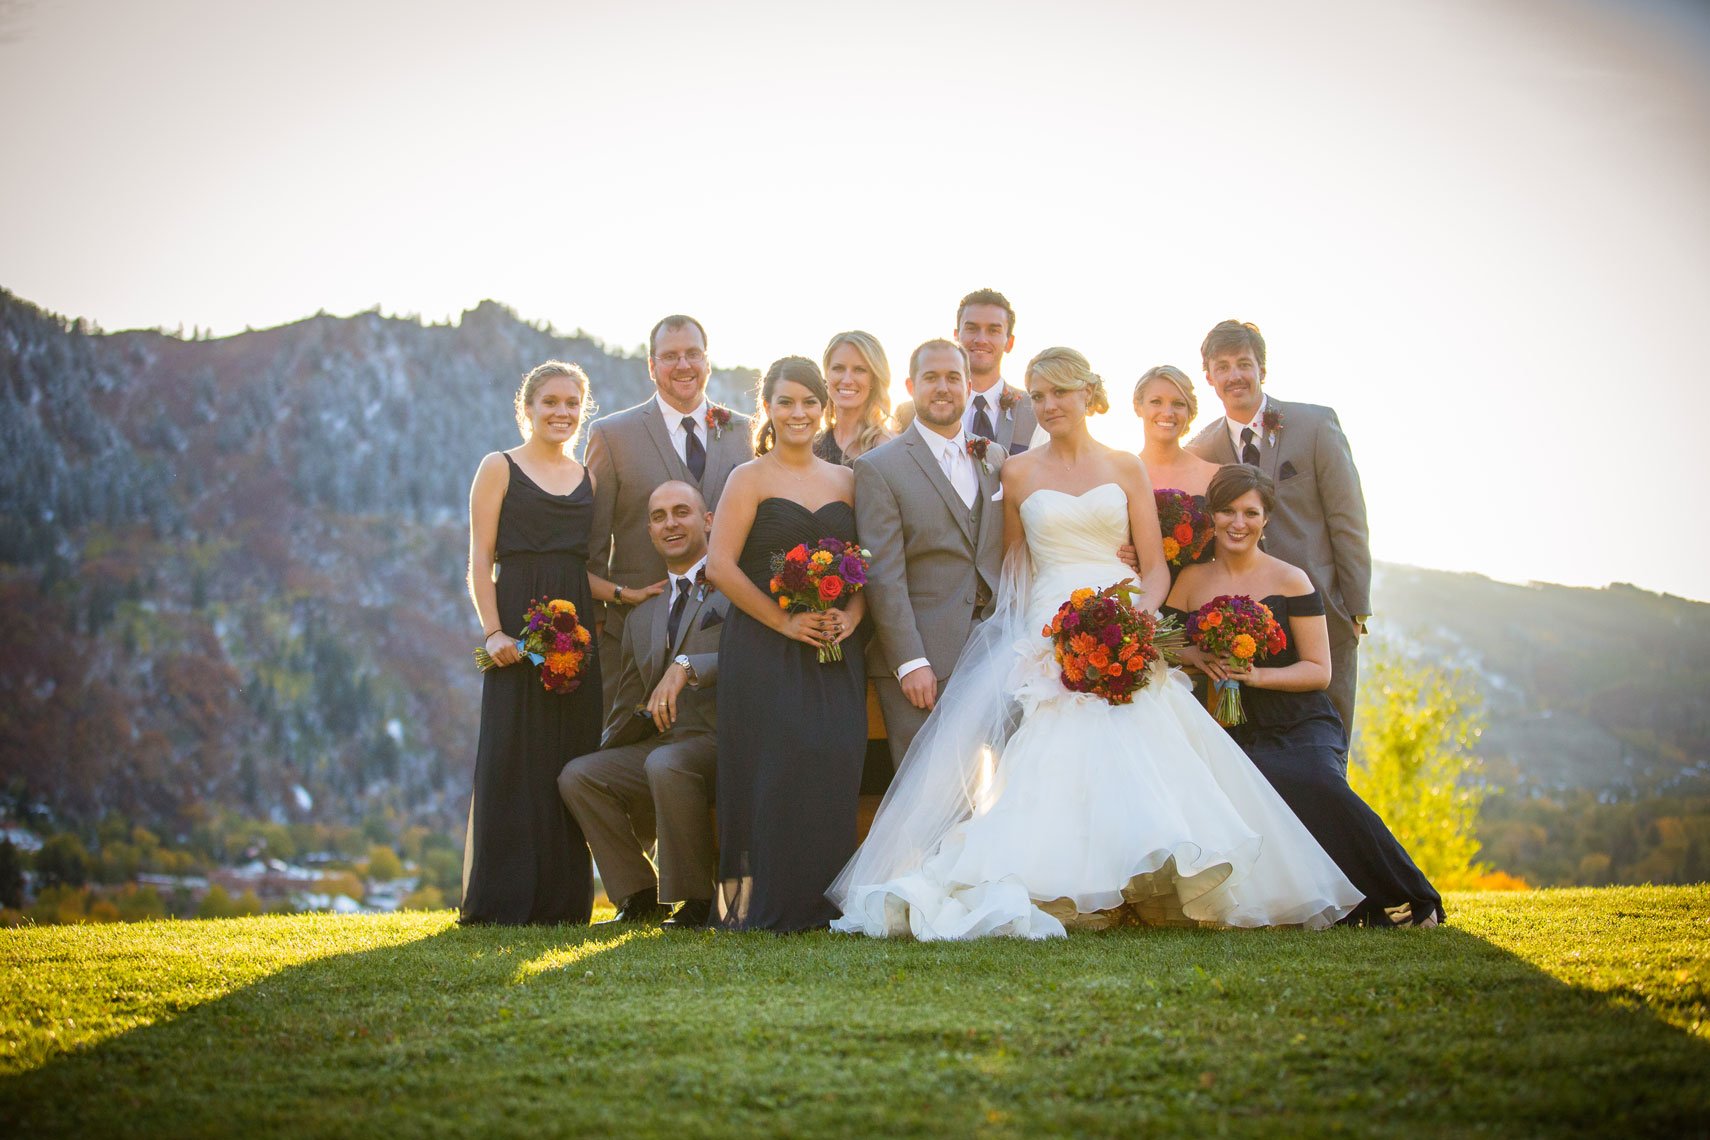 Wedding Photographers in Western North Carolina Area based in Asheville NC